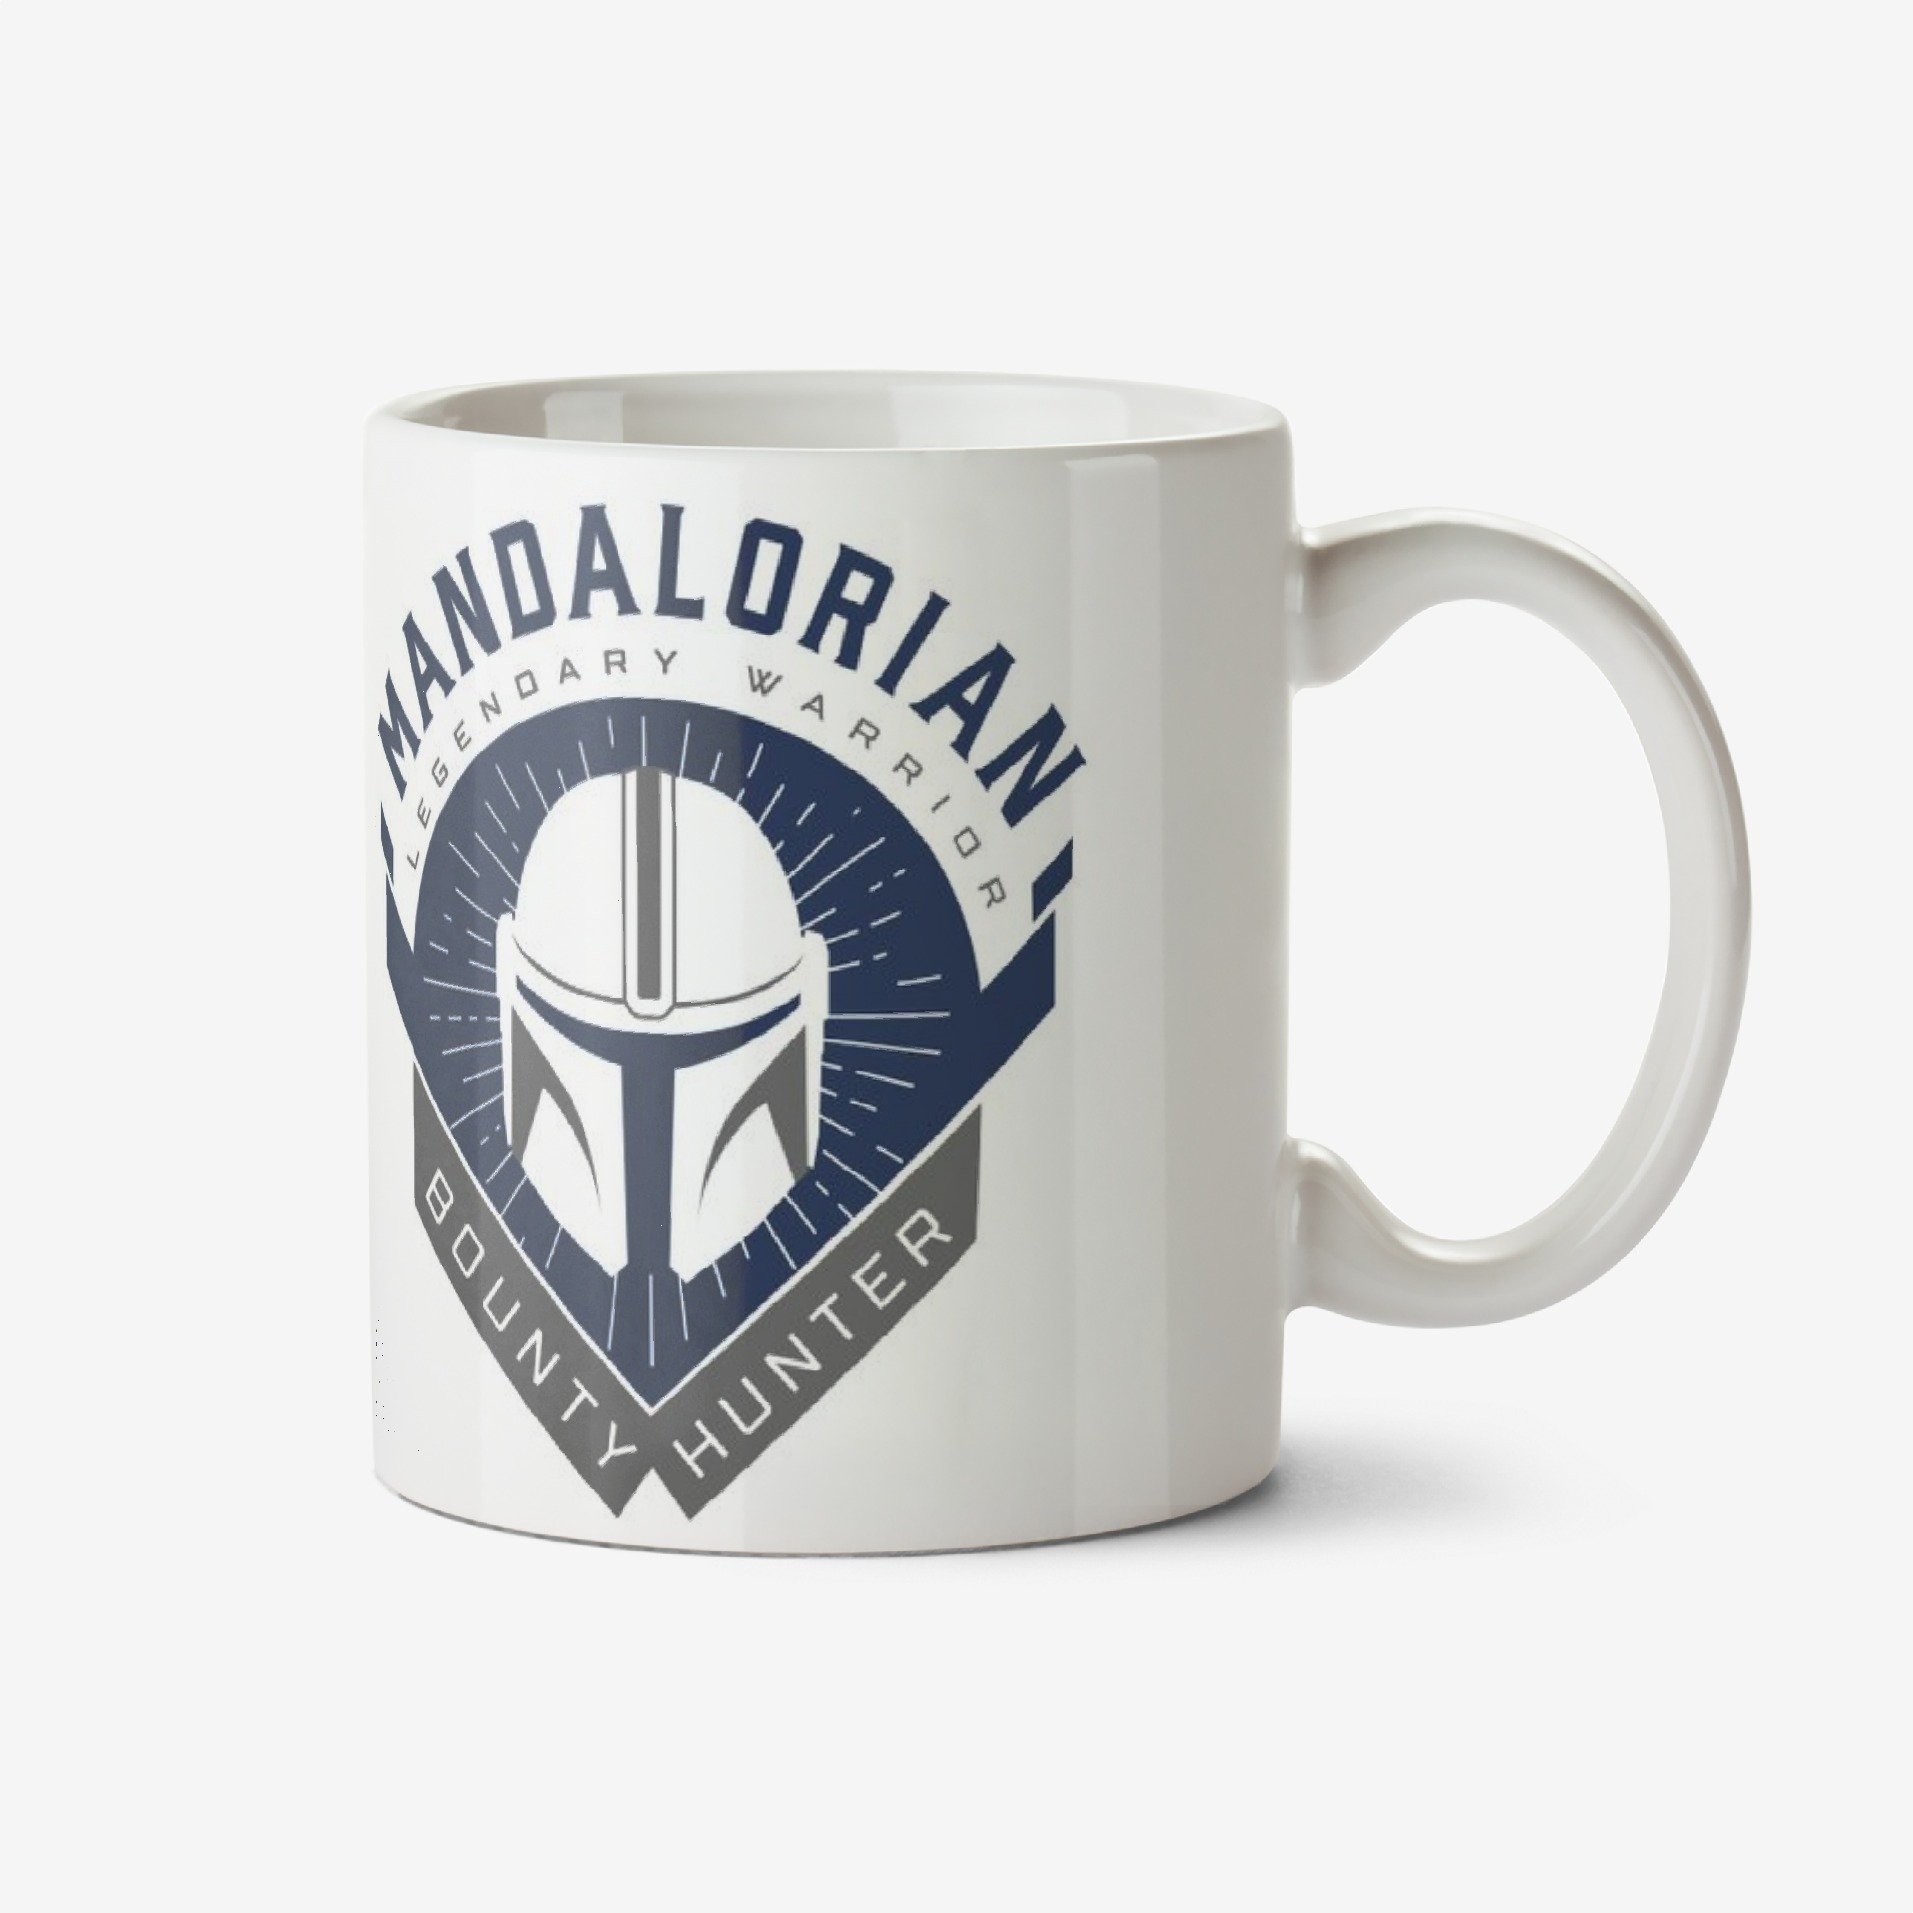 Mandalorian Legendary Bounty Hunter Star Wars Mug Ceramic Mug